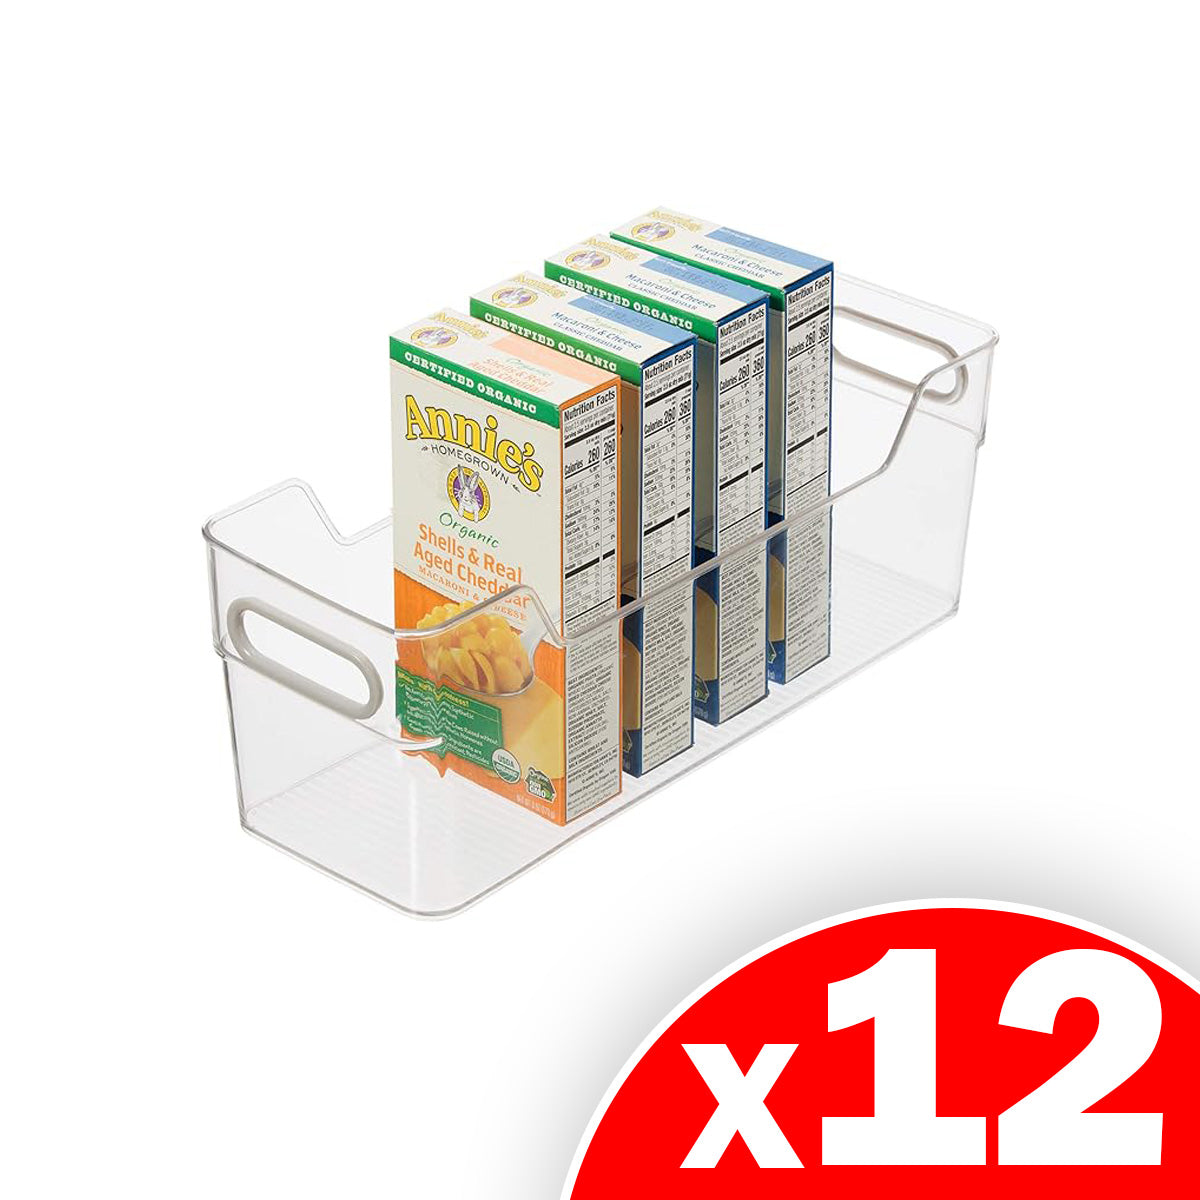 Multi-Use Organizer Bins, 12 Pack